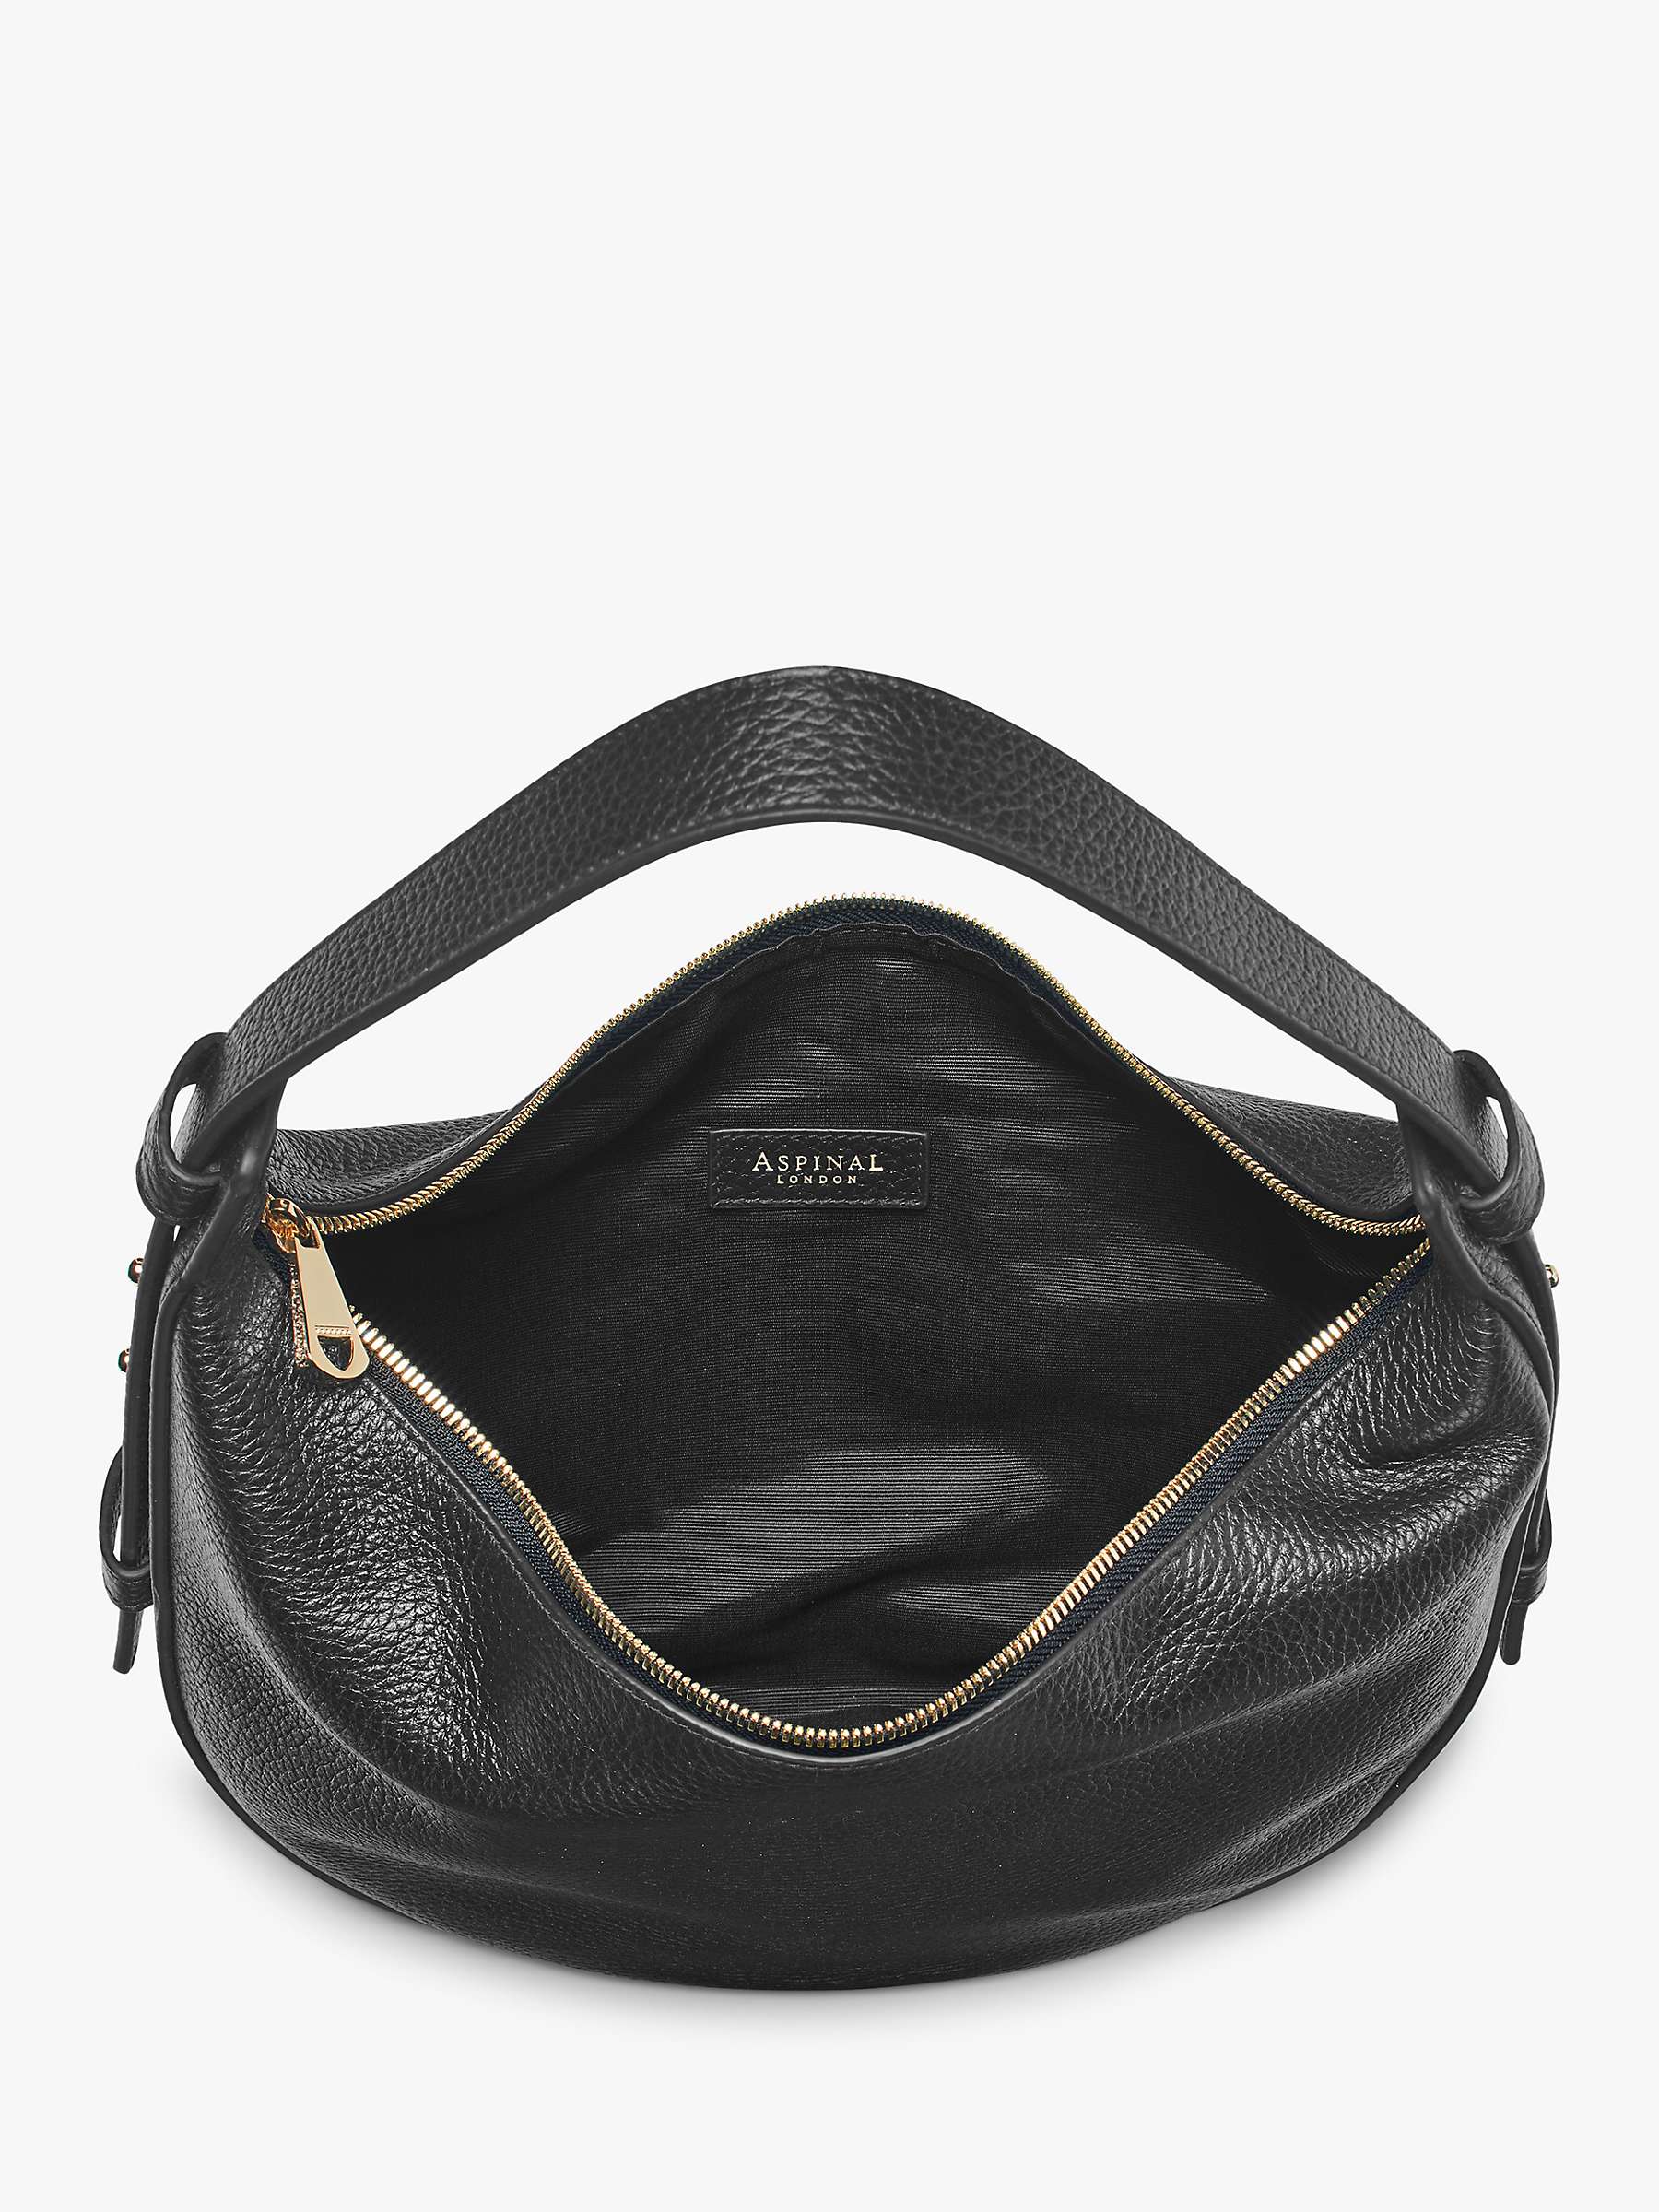 Buy Aspinal of London Pebble Leather Crescent Hobo Bag Online at johnlewis.com